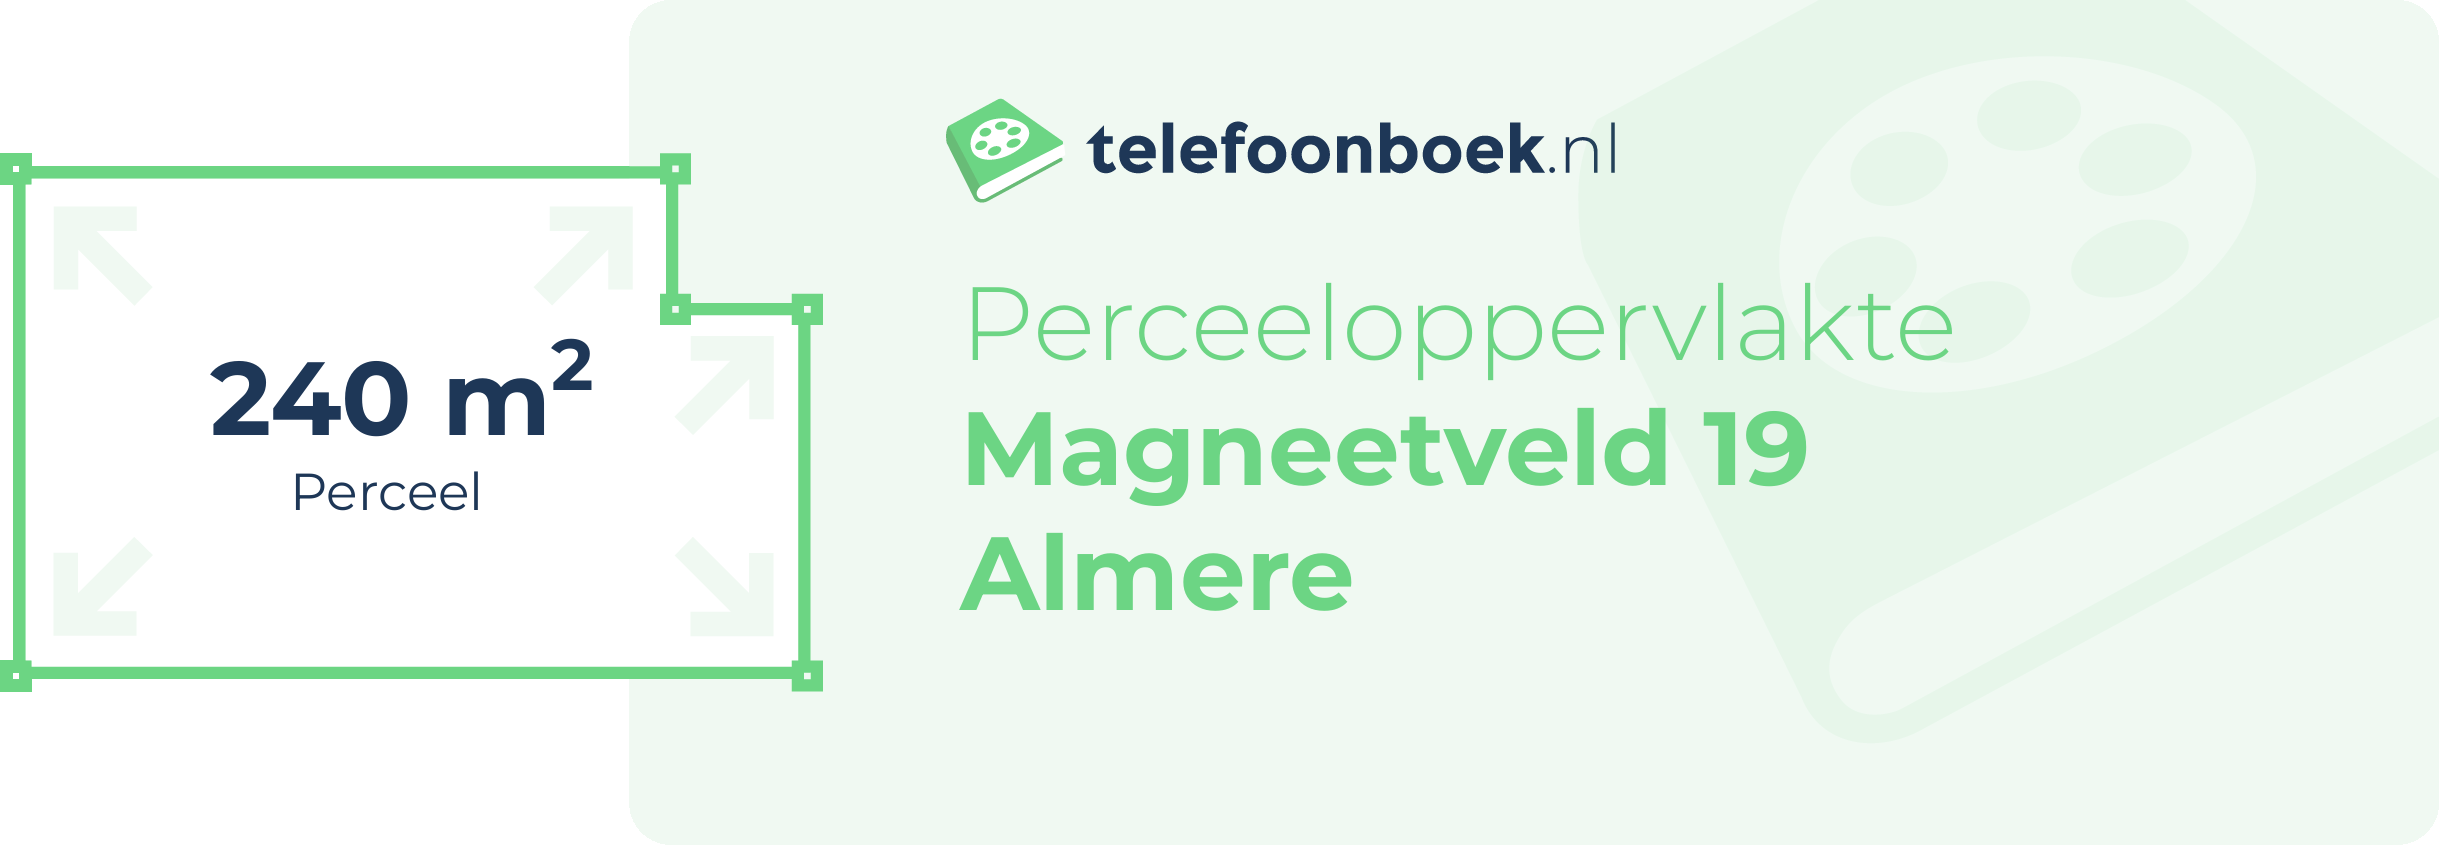 Perceeloppervlakte Magneetveld 19 Almere